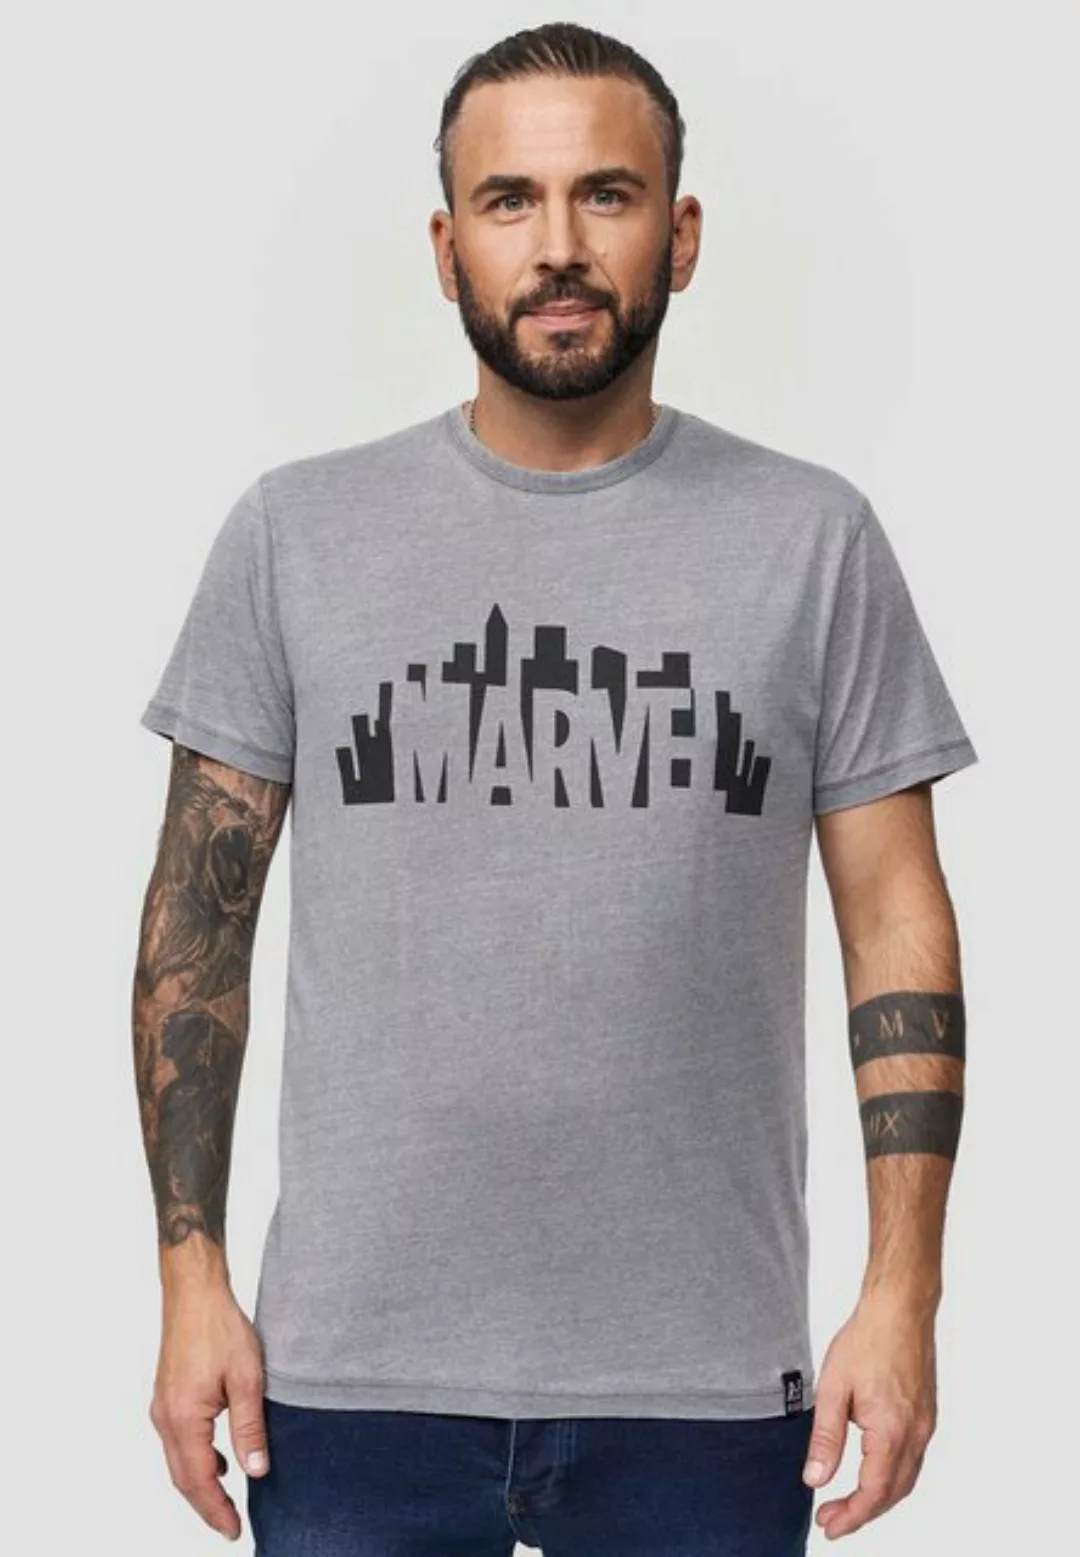 Recovered T-Shirt Marvel City Logo Light Grey GOTS zertifizierte Bio-Baumwo günstig online kaufen